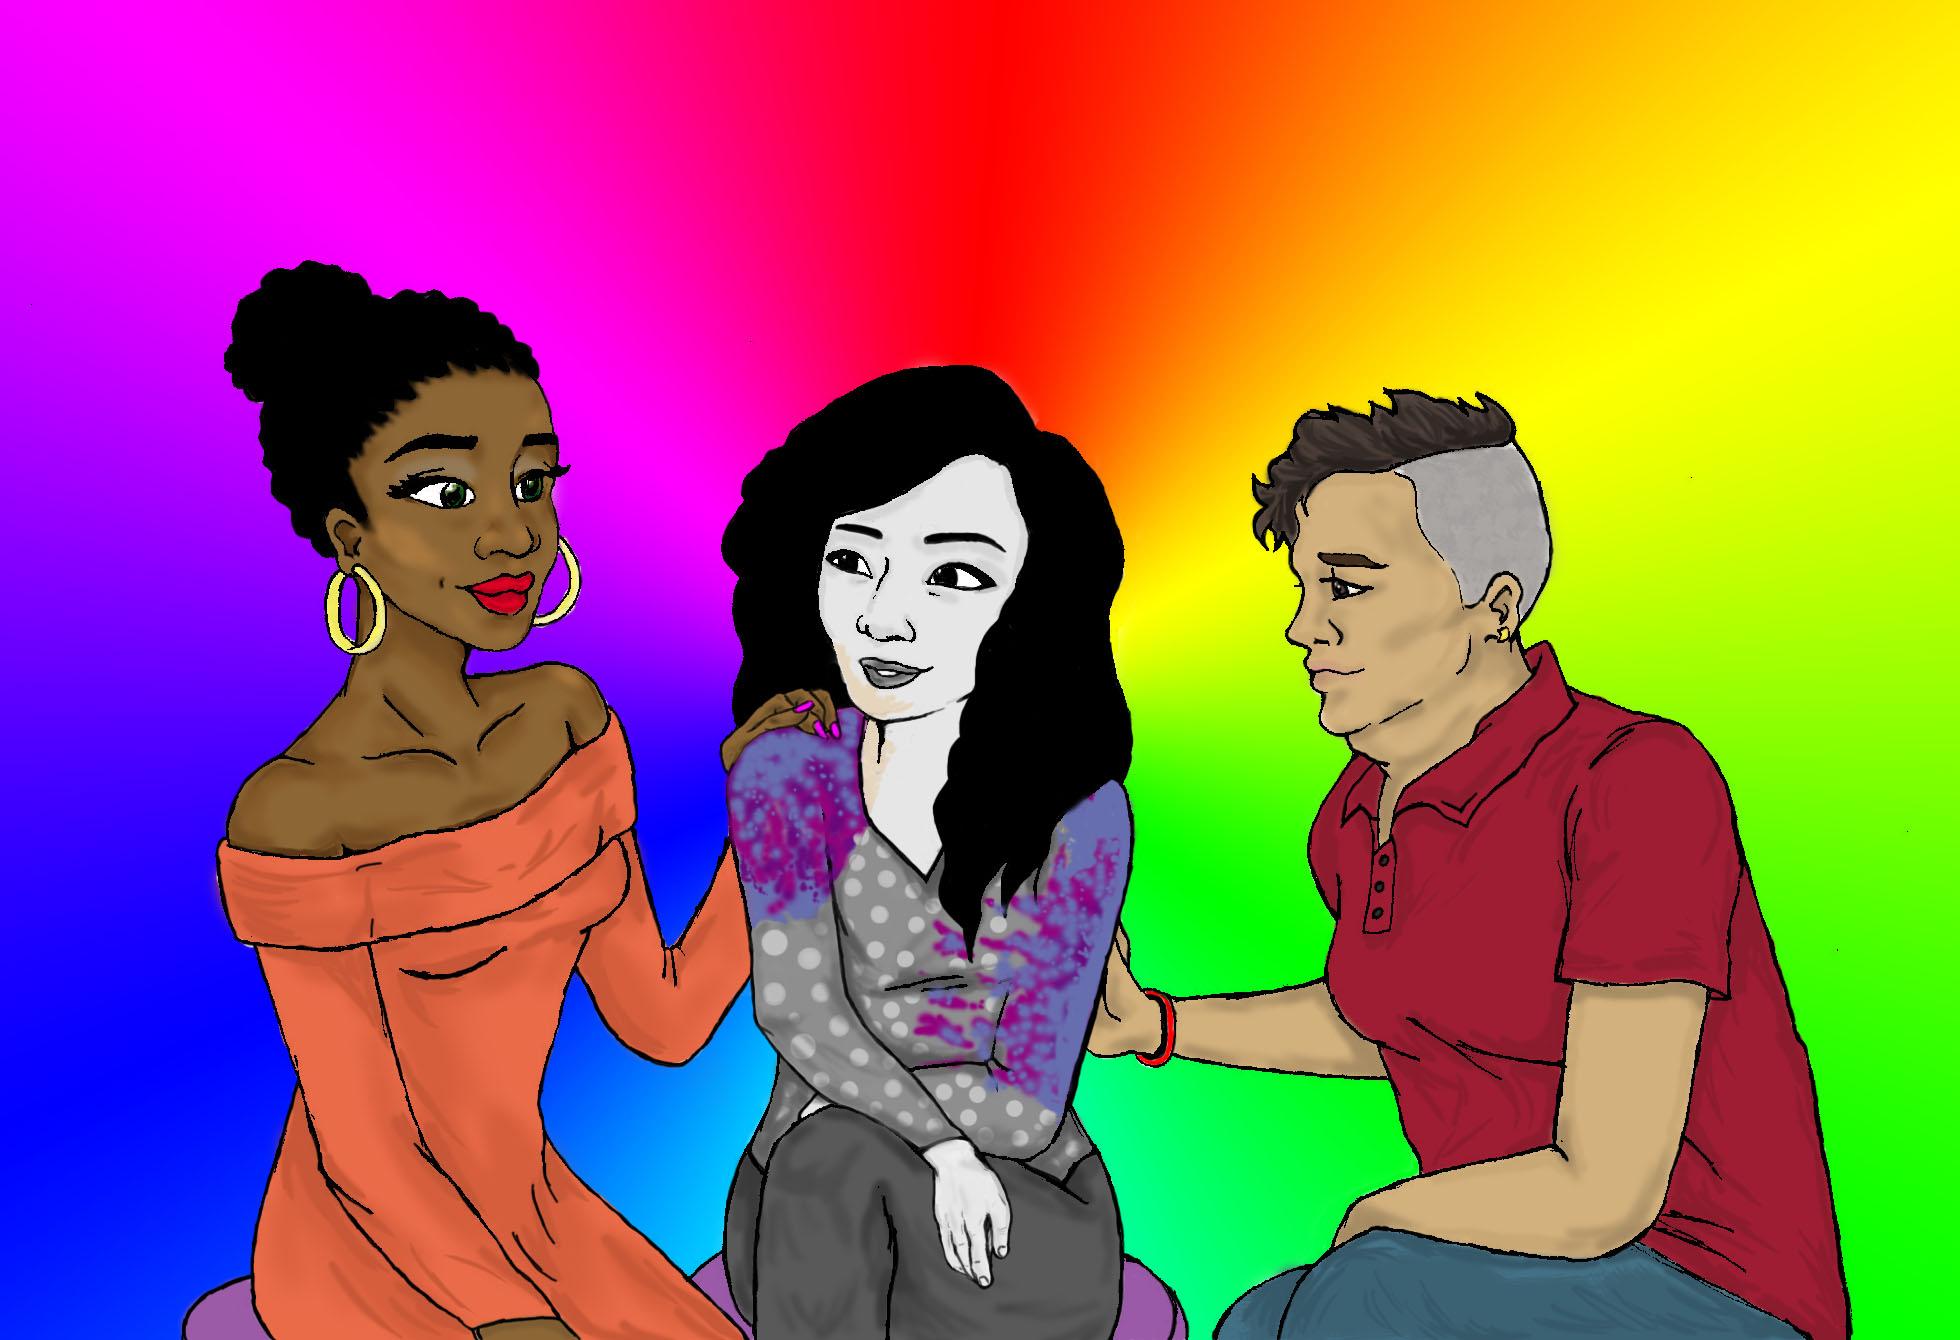 Illustration of three people sitting together